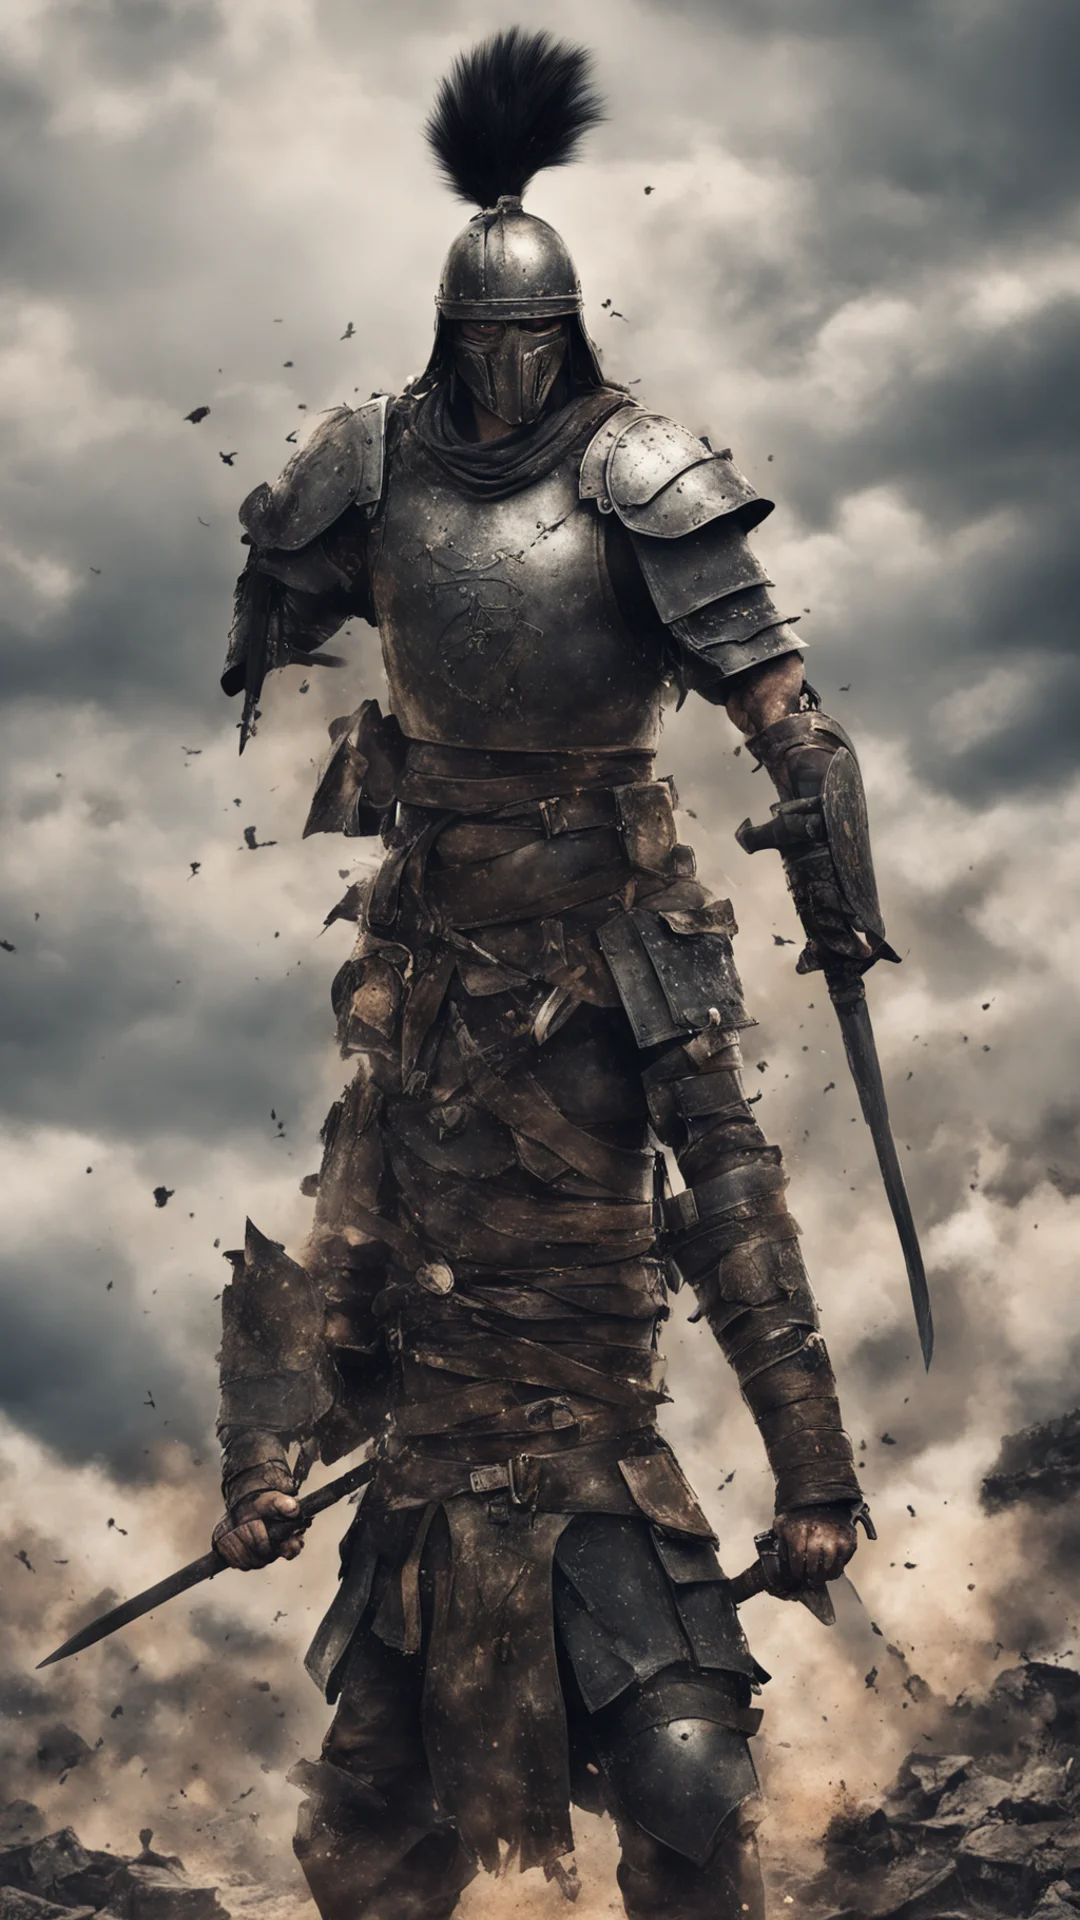 aiwarrior in the war tall